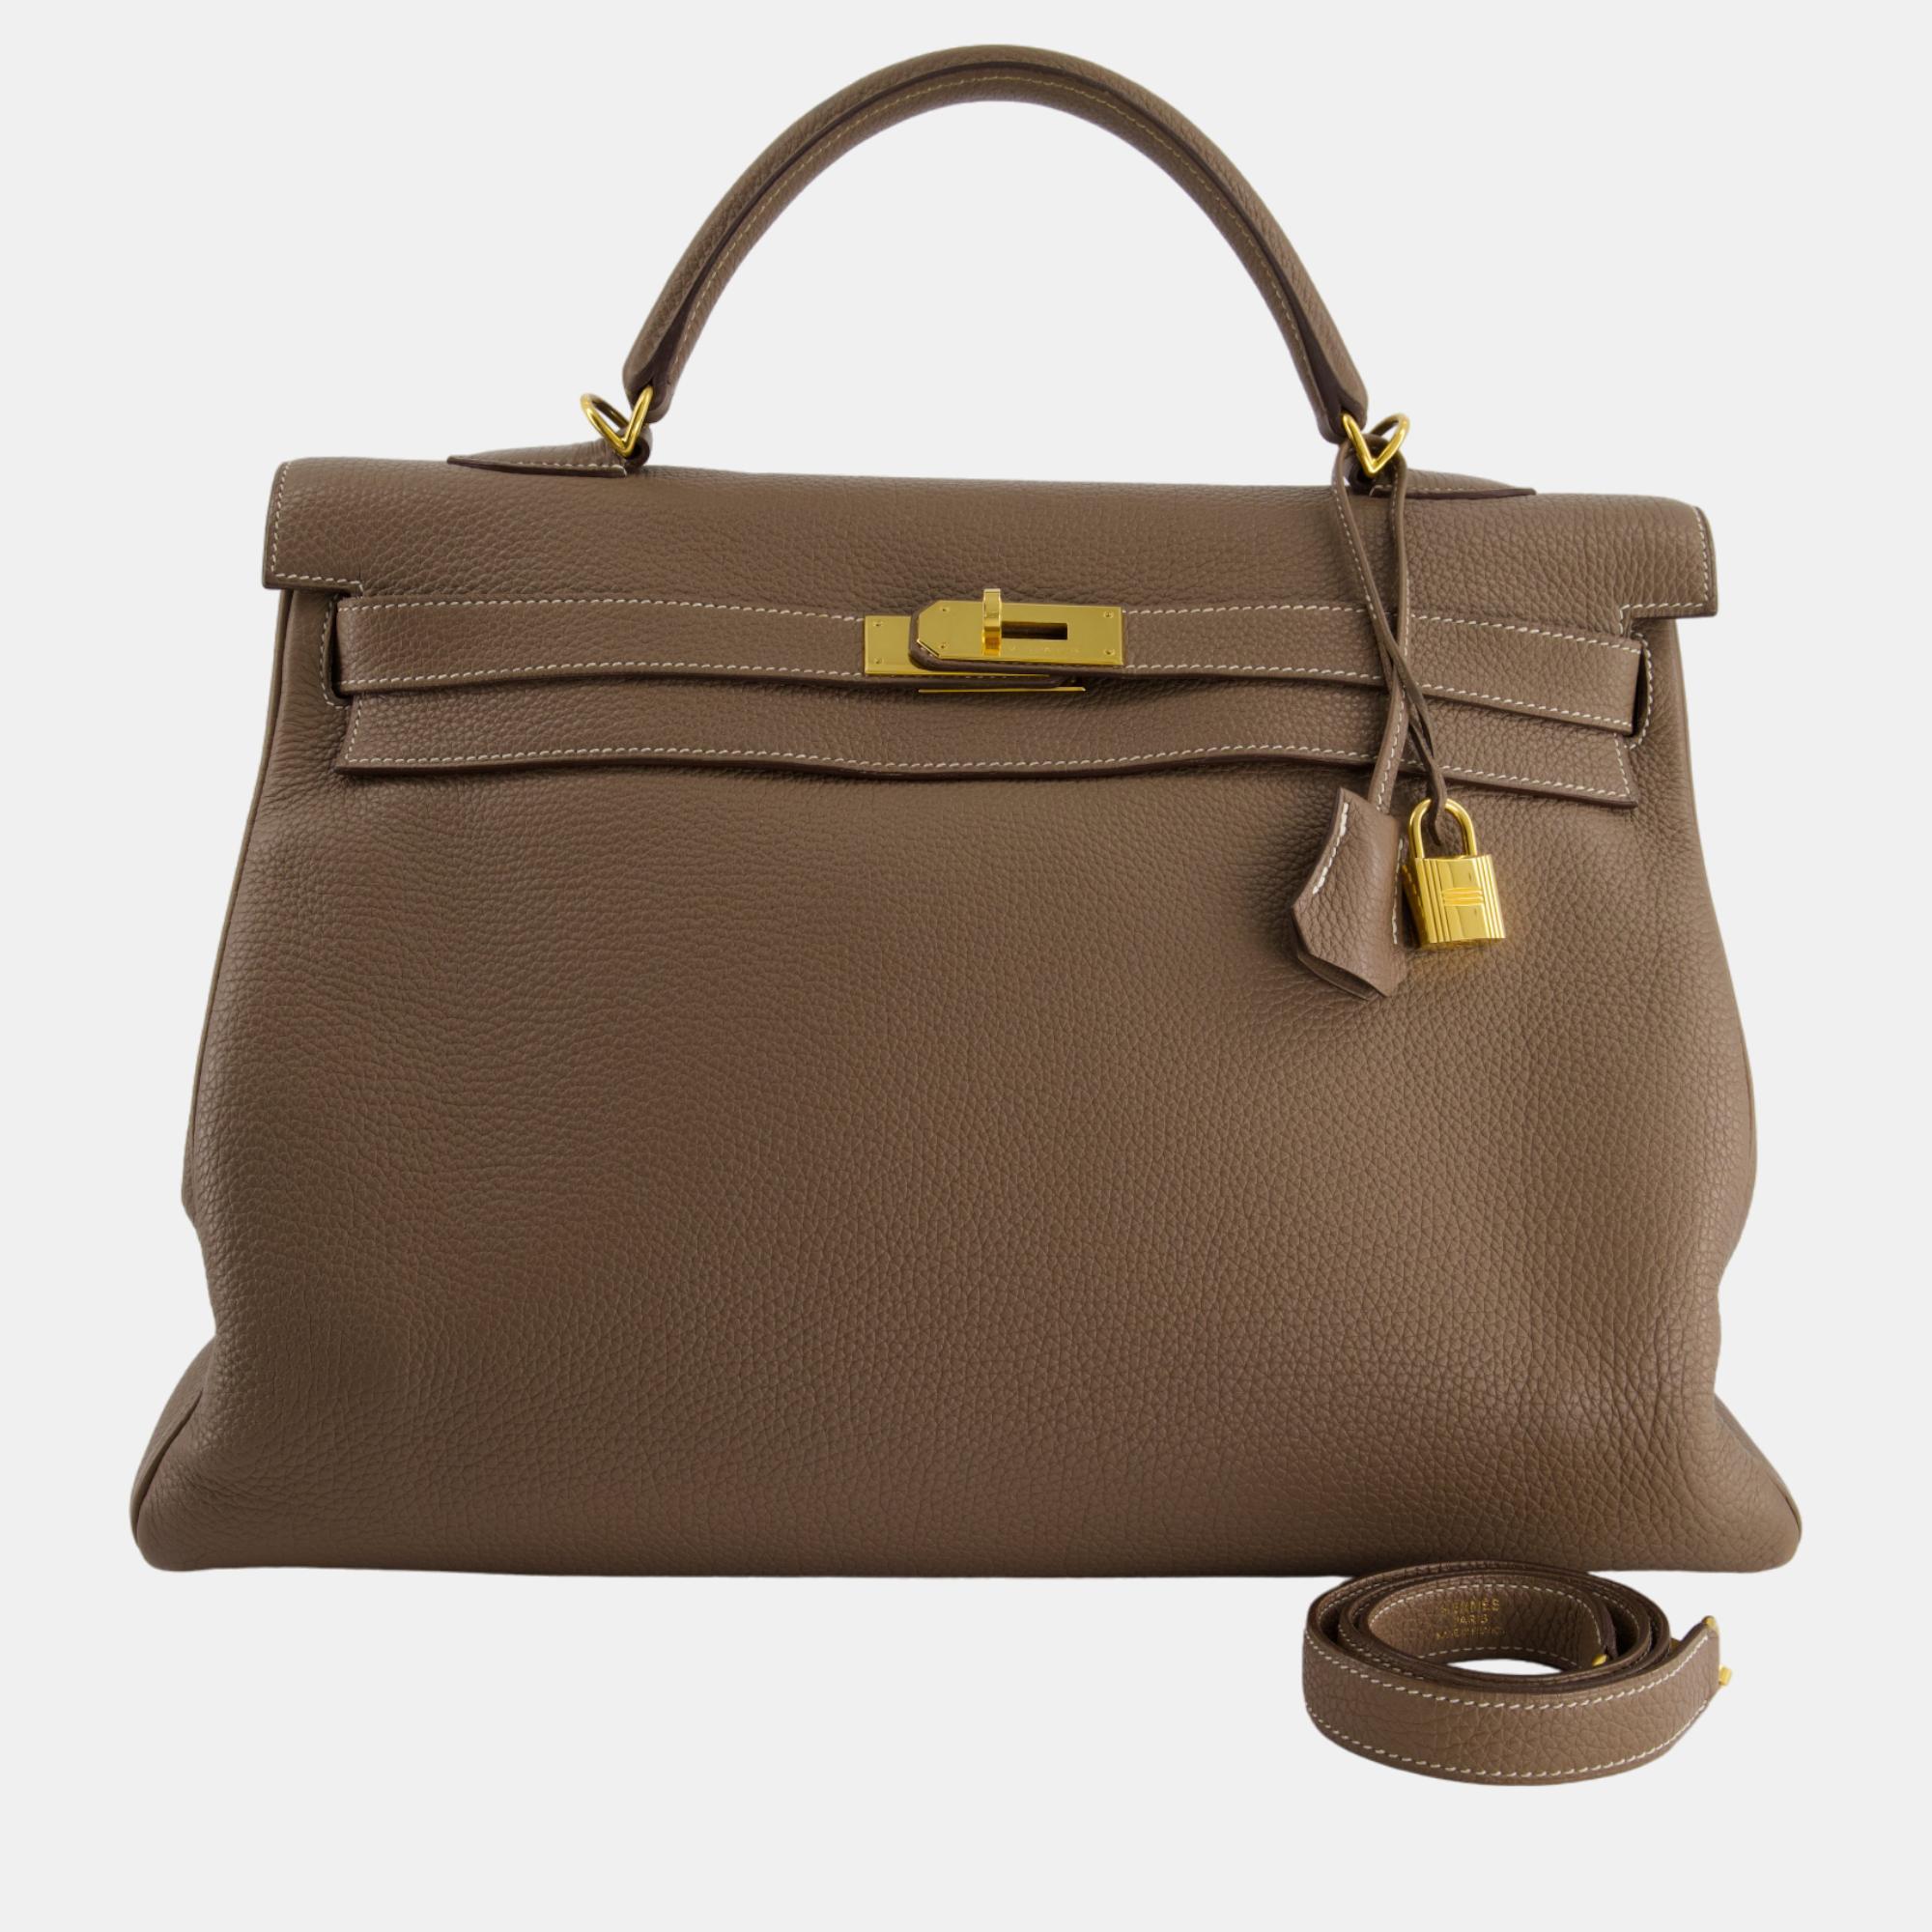 Hermes Kelly 40cm Bag Etoupe Togo Leather With Gold Hardware